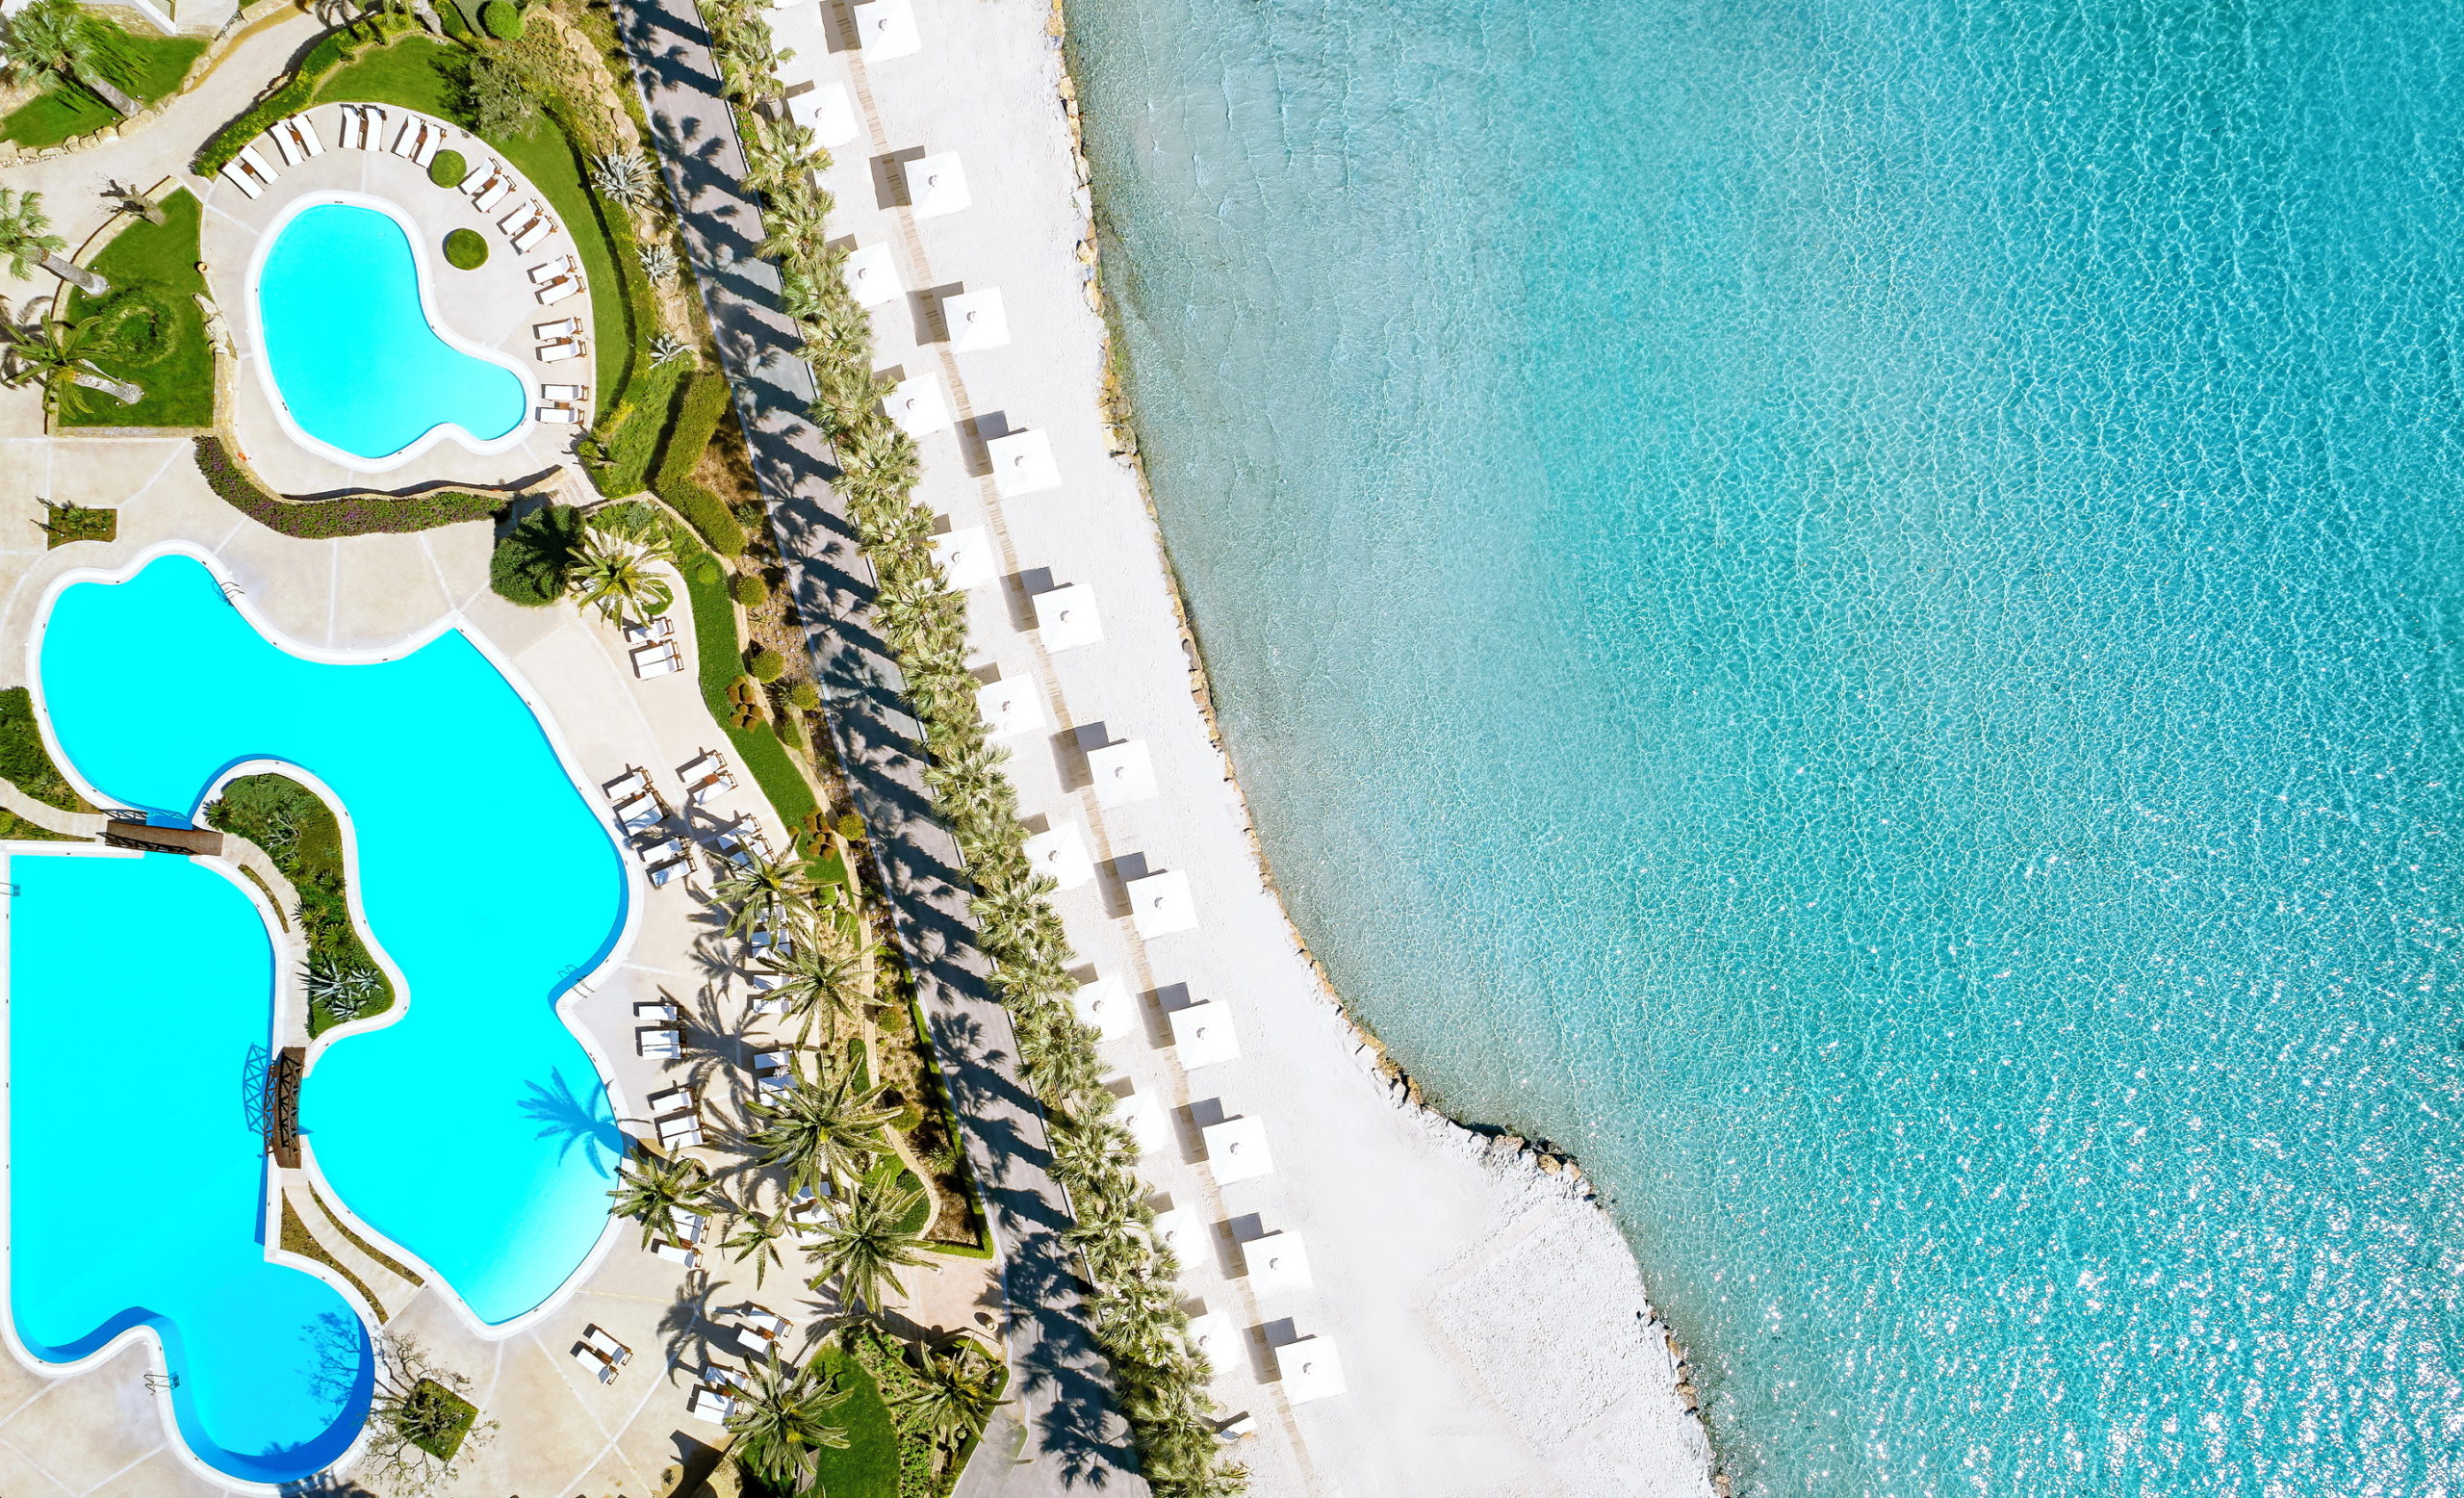 The Sani Beach Pool at Sani Resort, Greece